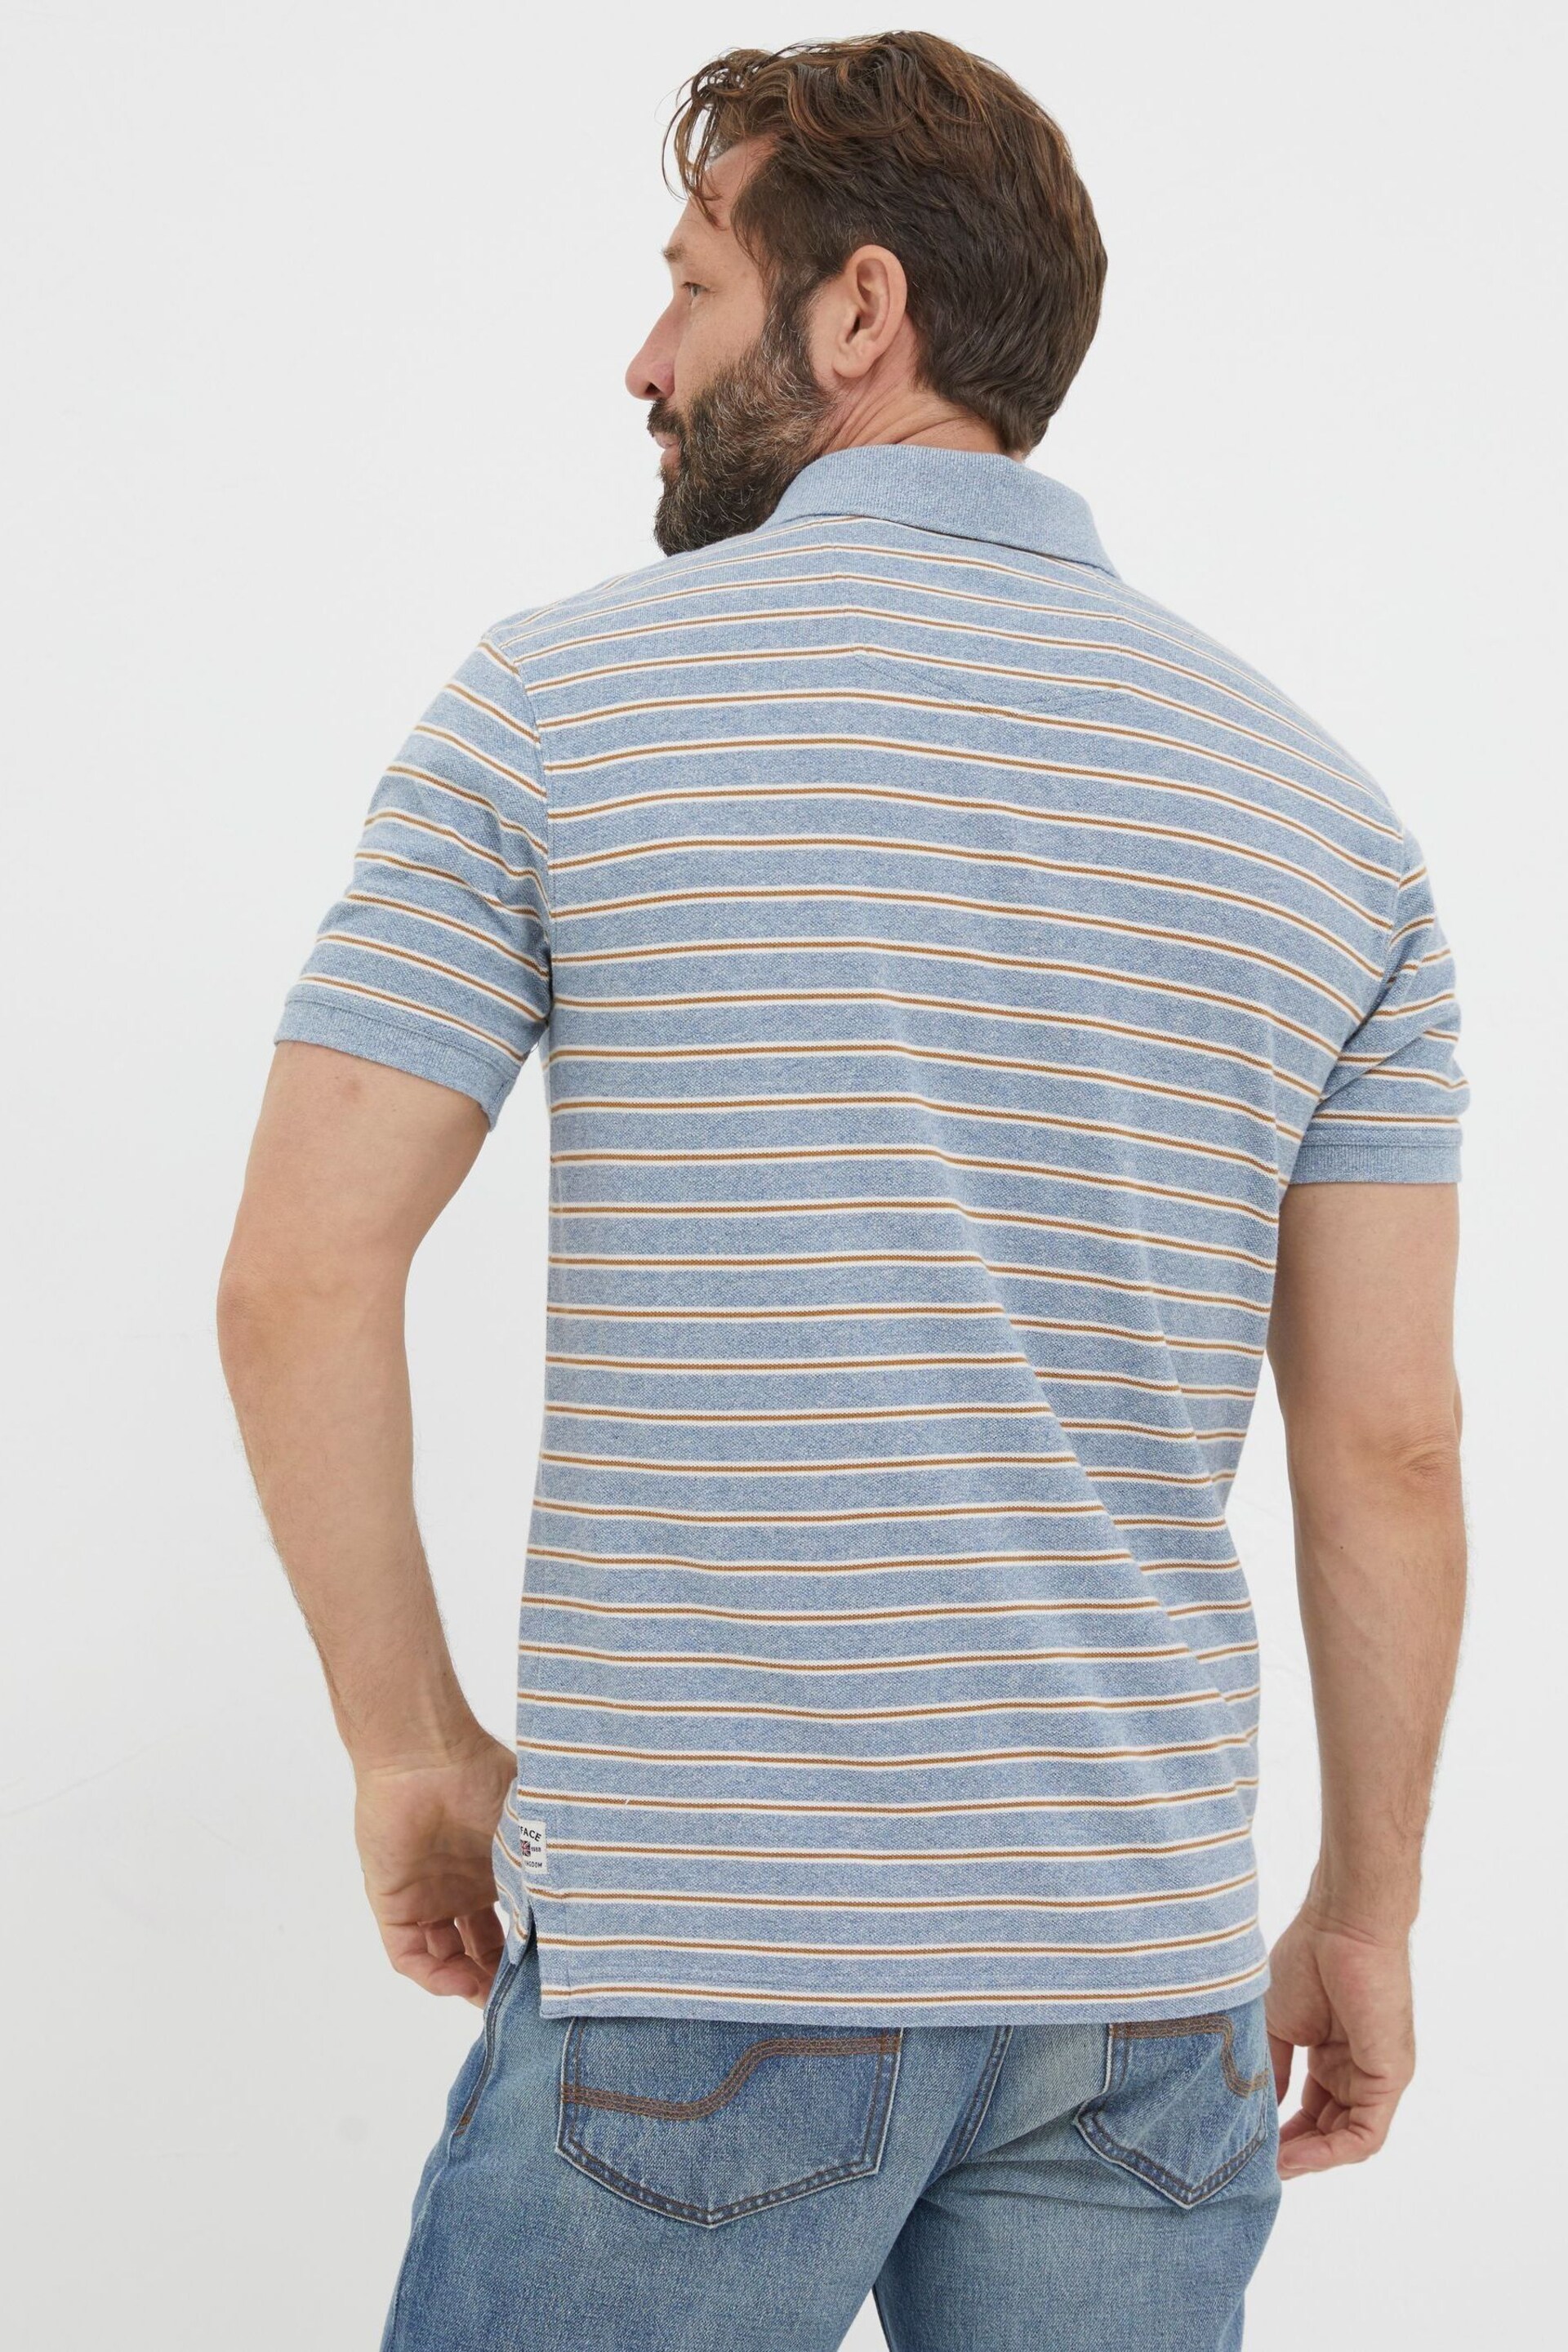 FatFace Blue Stripe Polo Shirt - Image 2 of 5